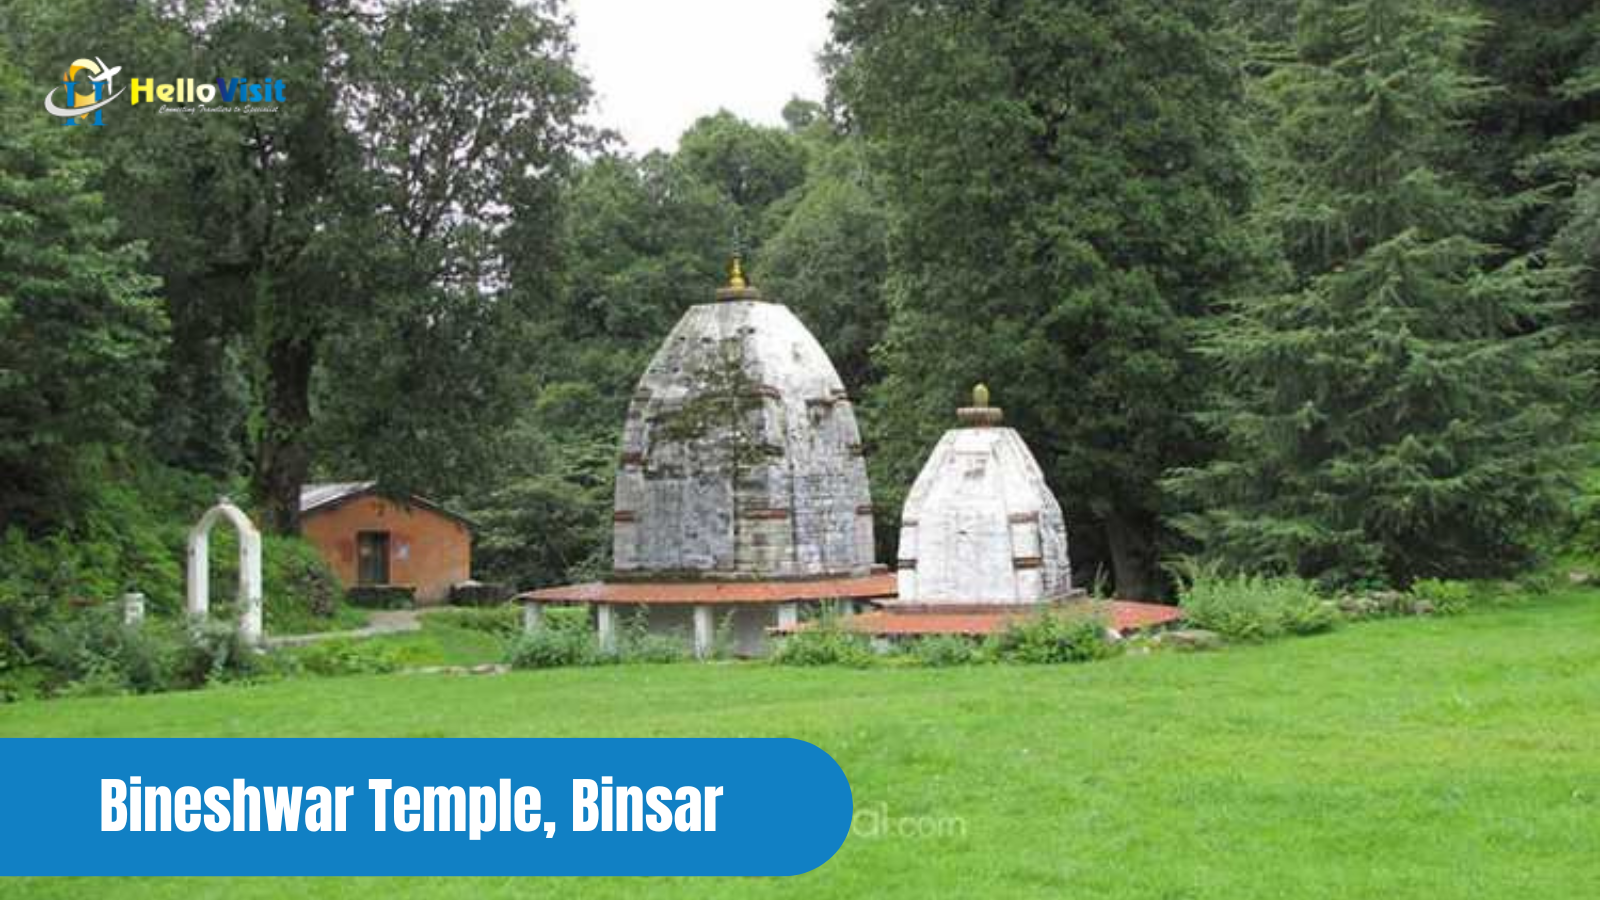 Bineshwar Temple, Binsar